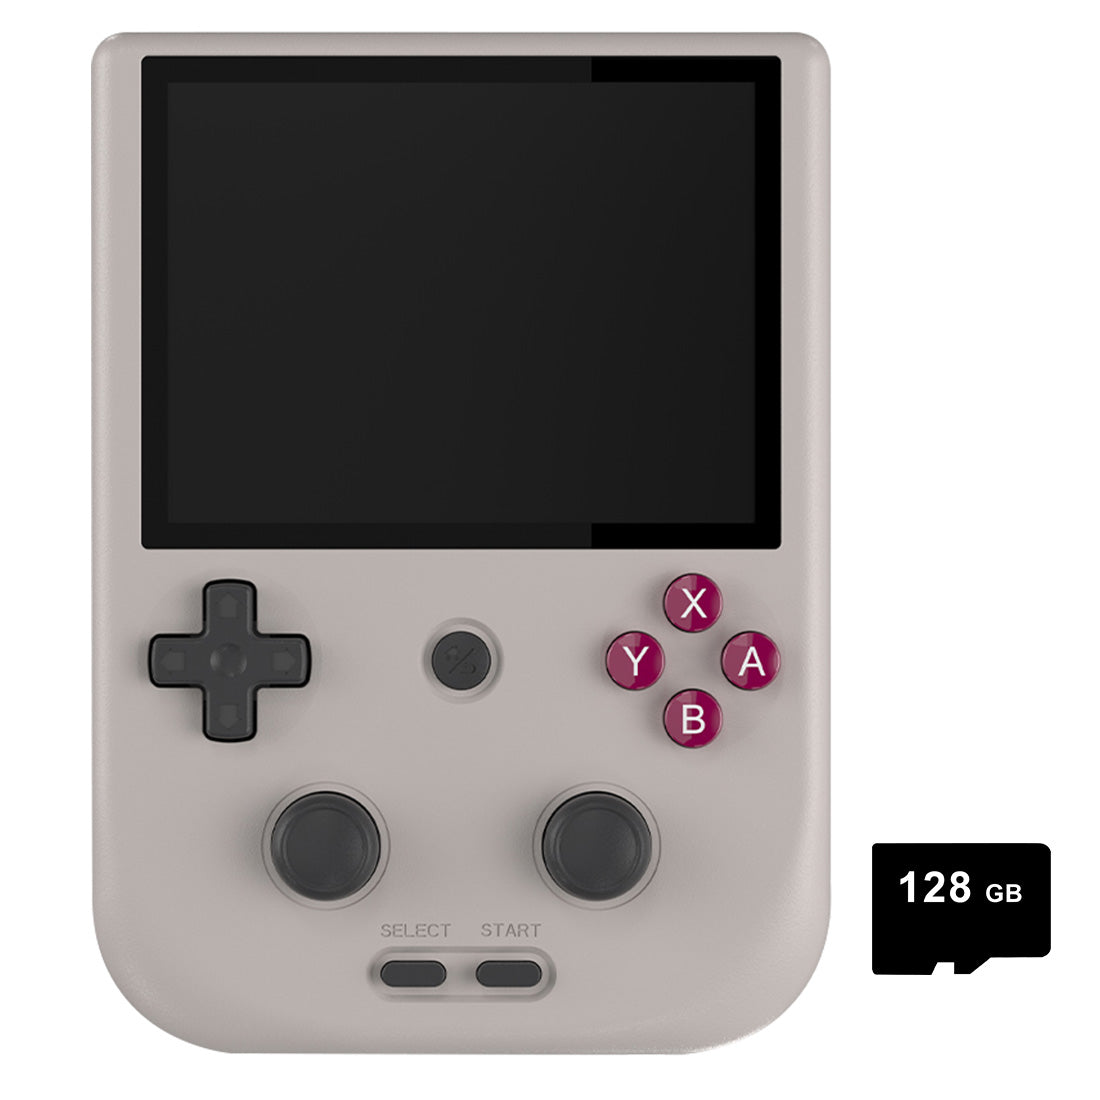 litnxt-anbernic-rg-405v-4inch-handheld-game-console-grey-128gb-1100x1100